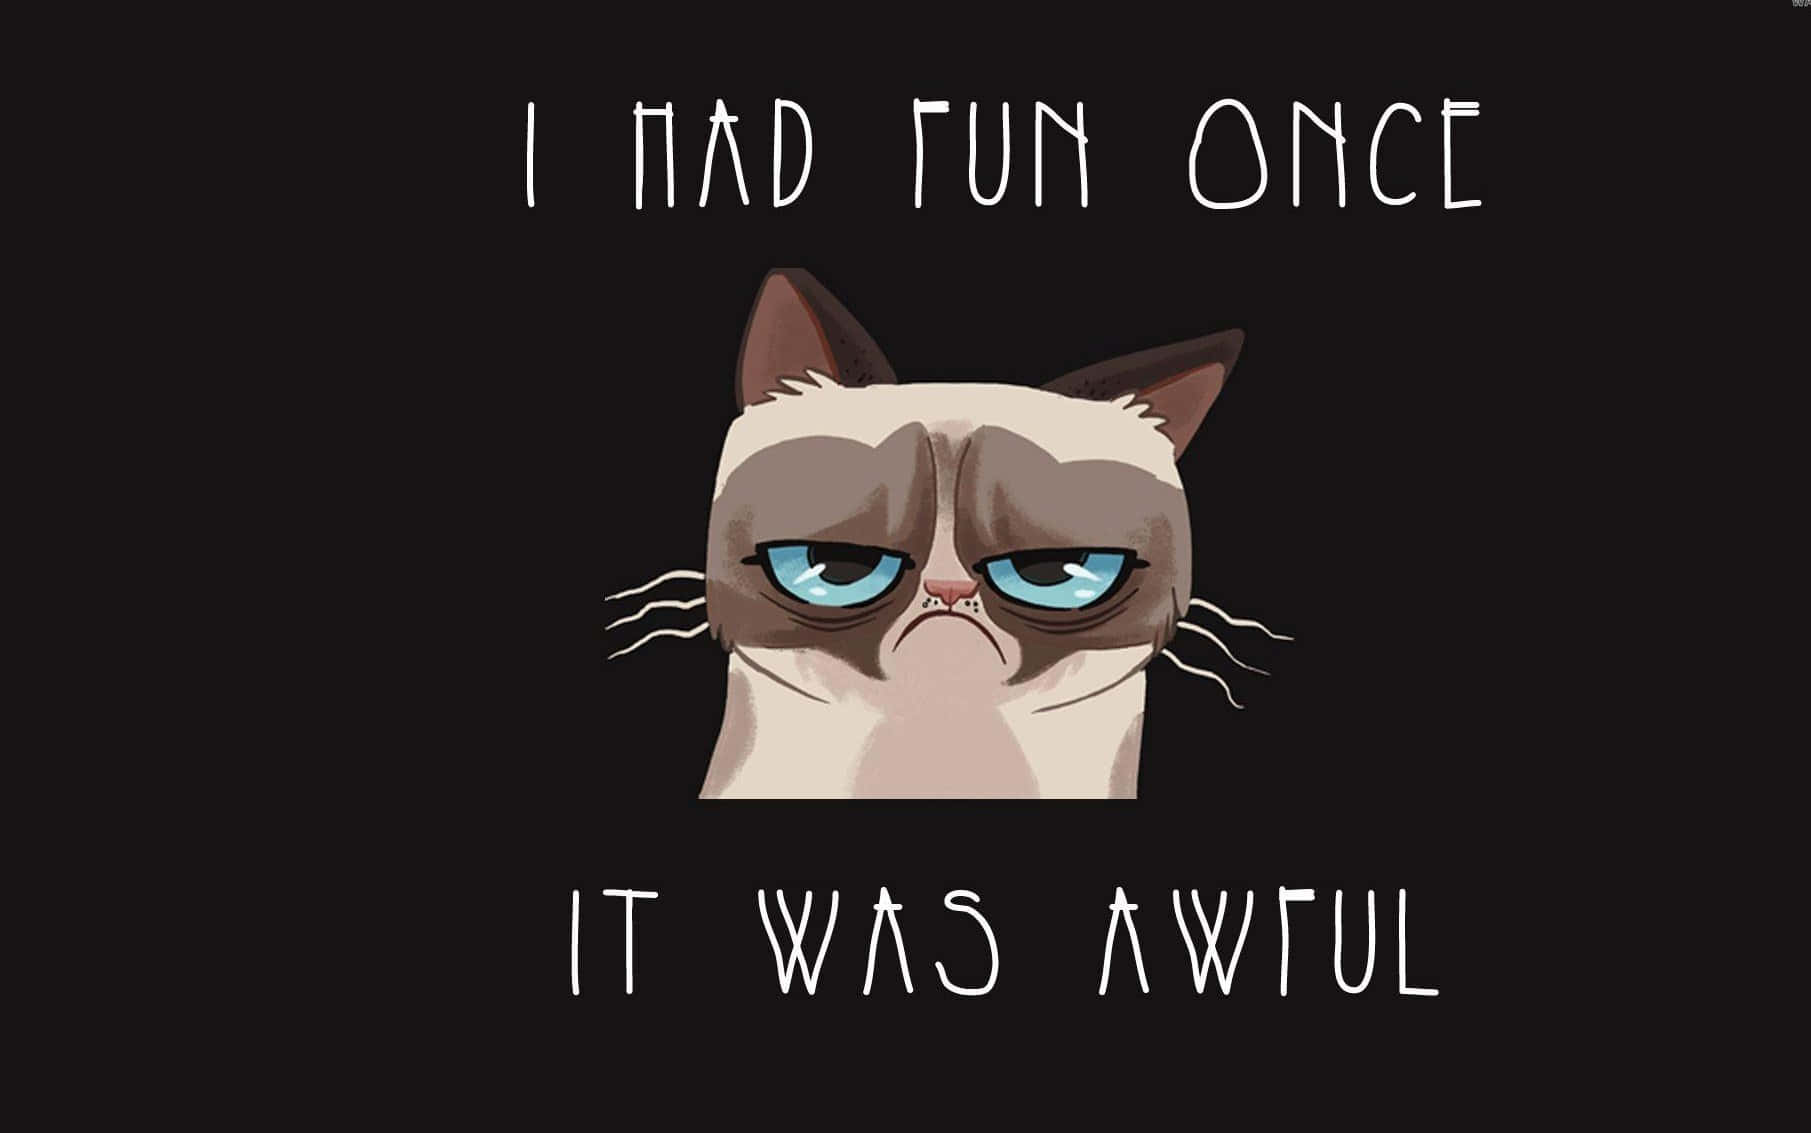 Grumpy Cat - I Had Fun Once It Was Awful Wallpaper